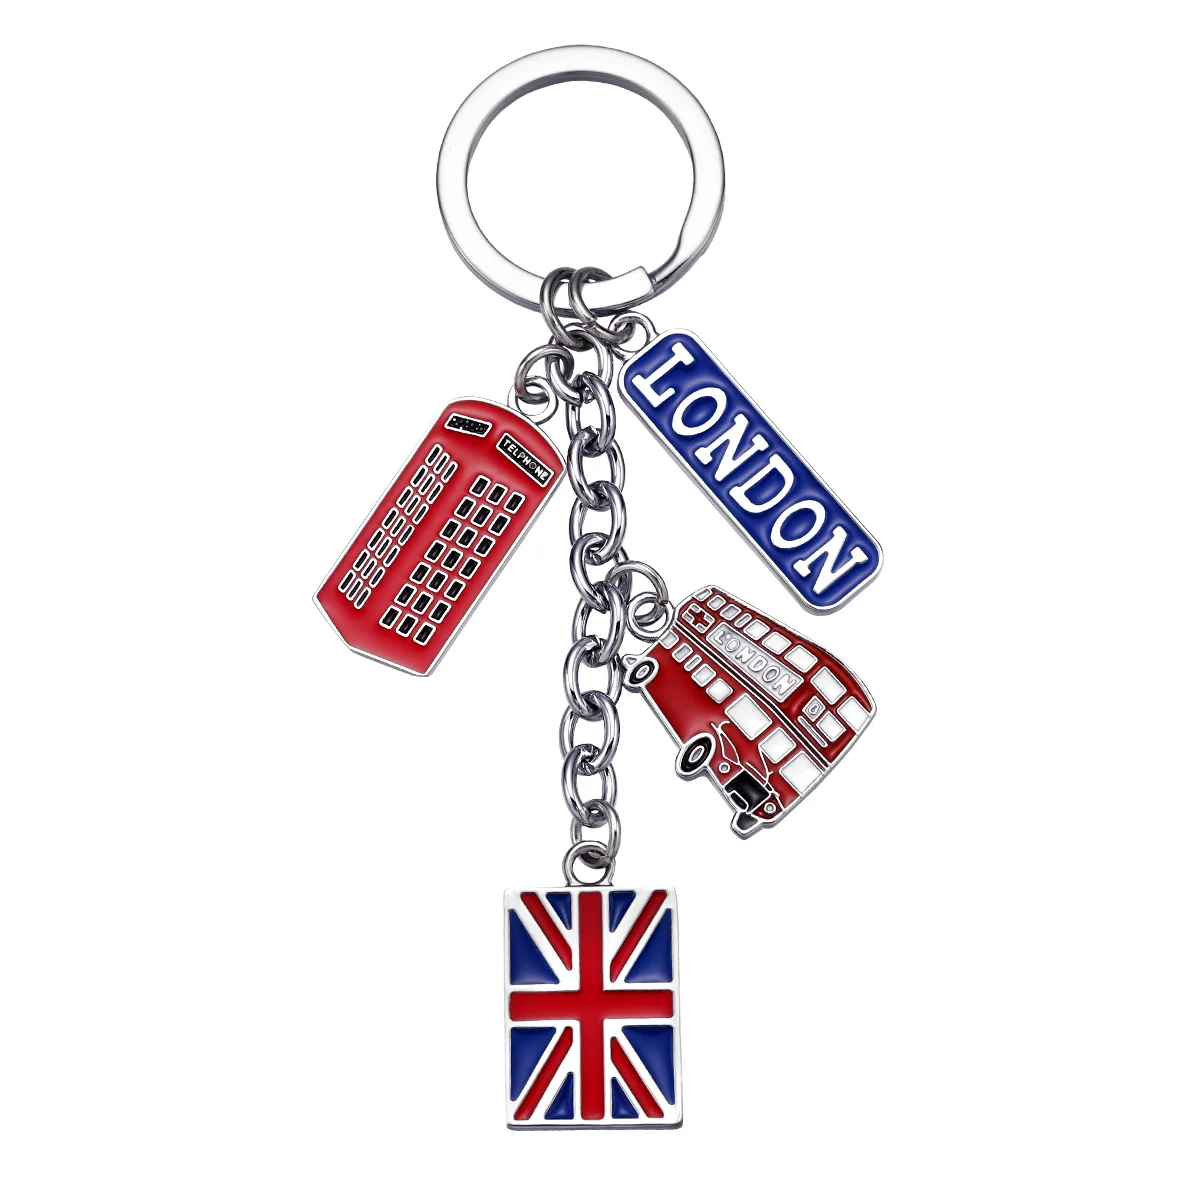 

Keychain Uk Flag London Souvenir Key Souvenirs Rings Promotional Gifts Ring England Union Jack Keyring Charm